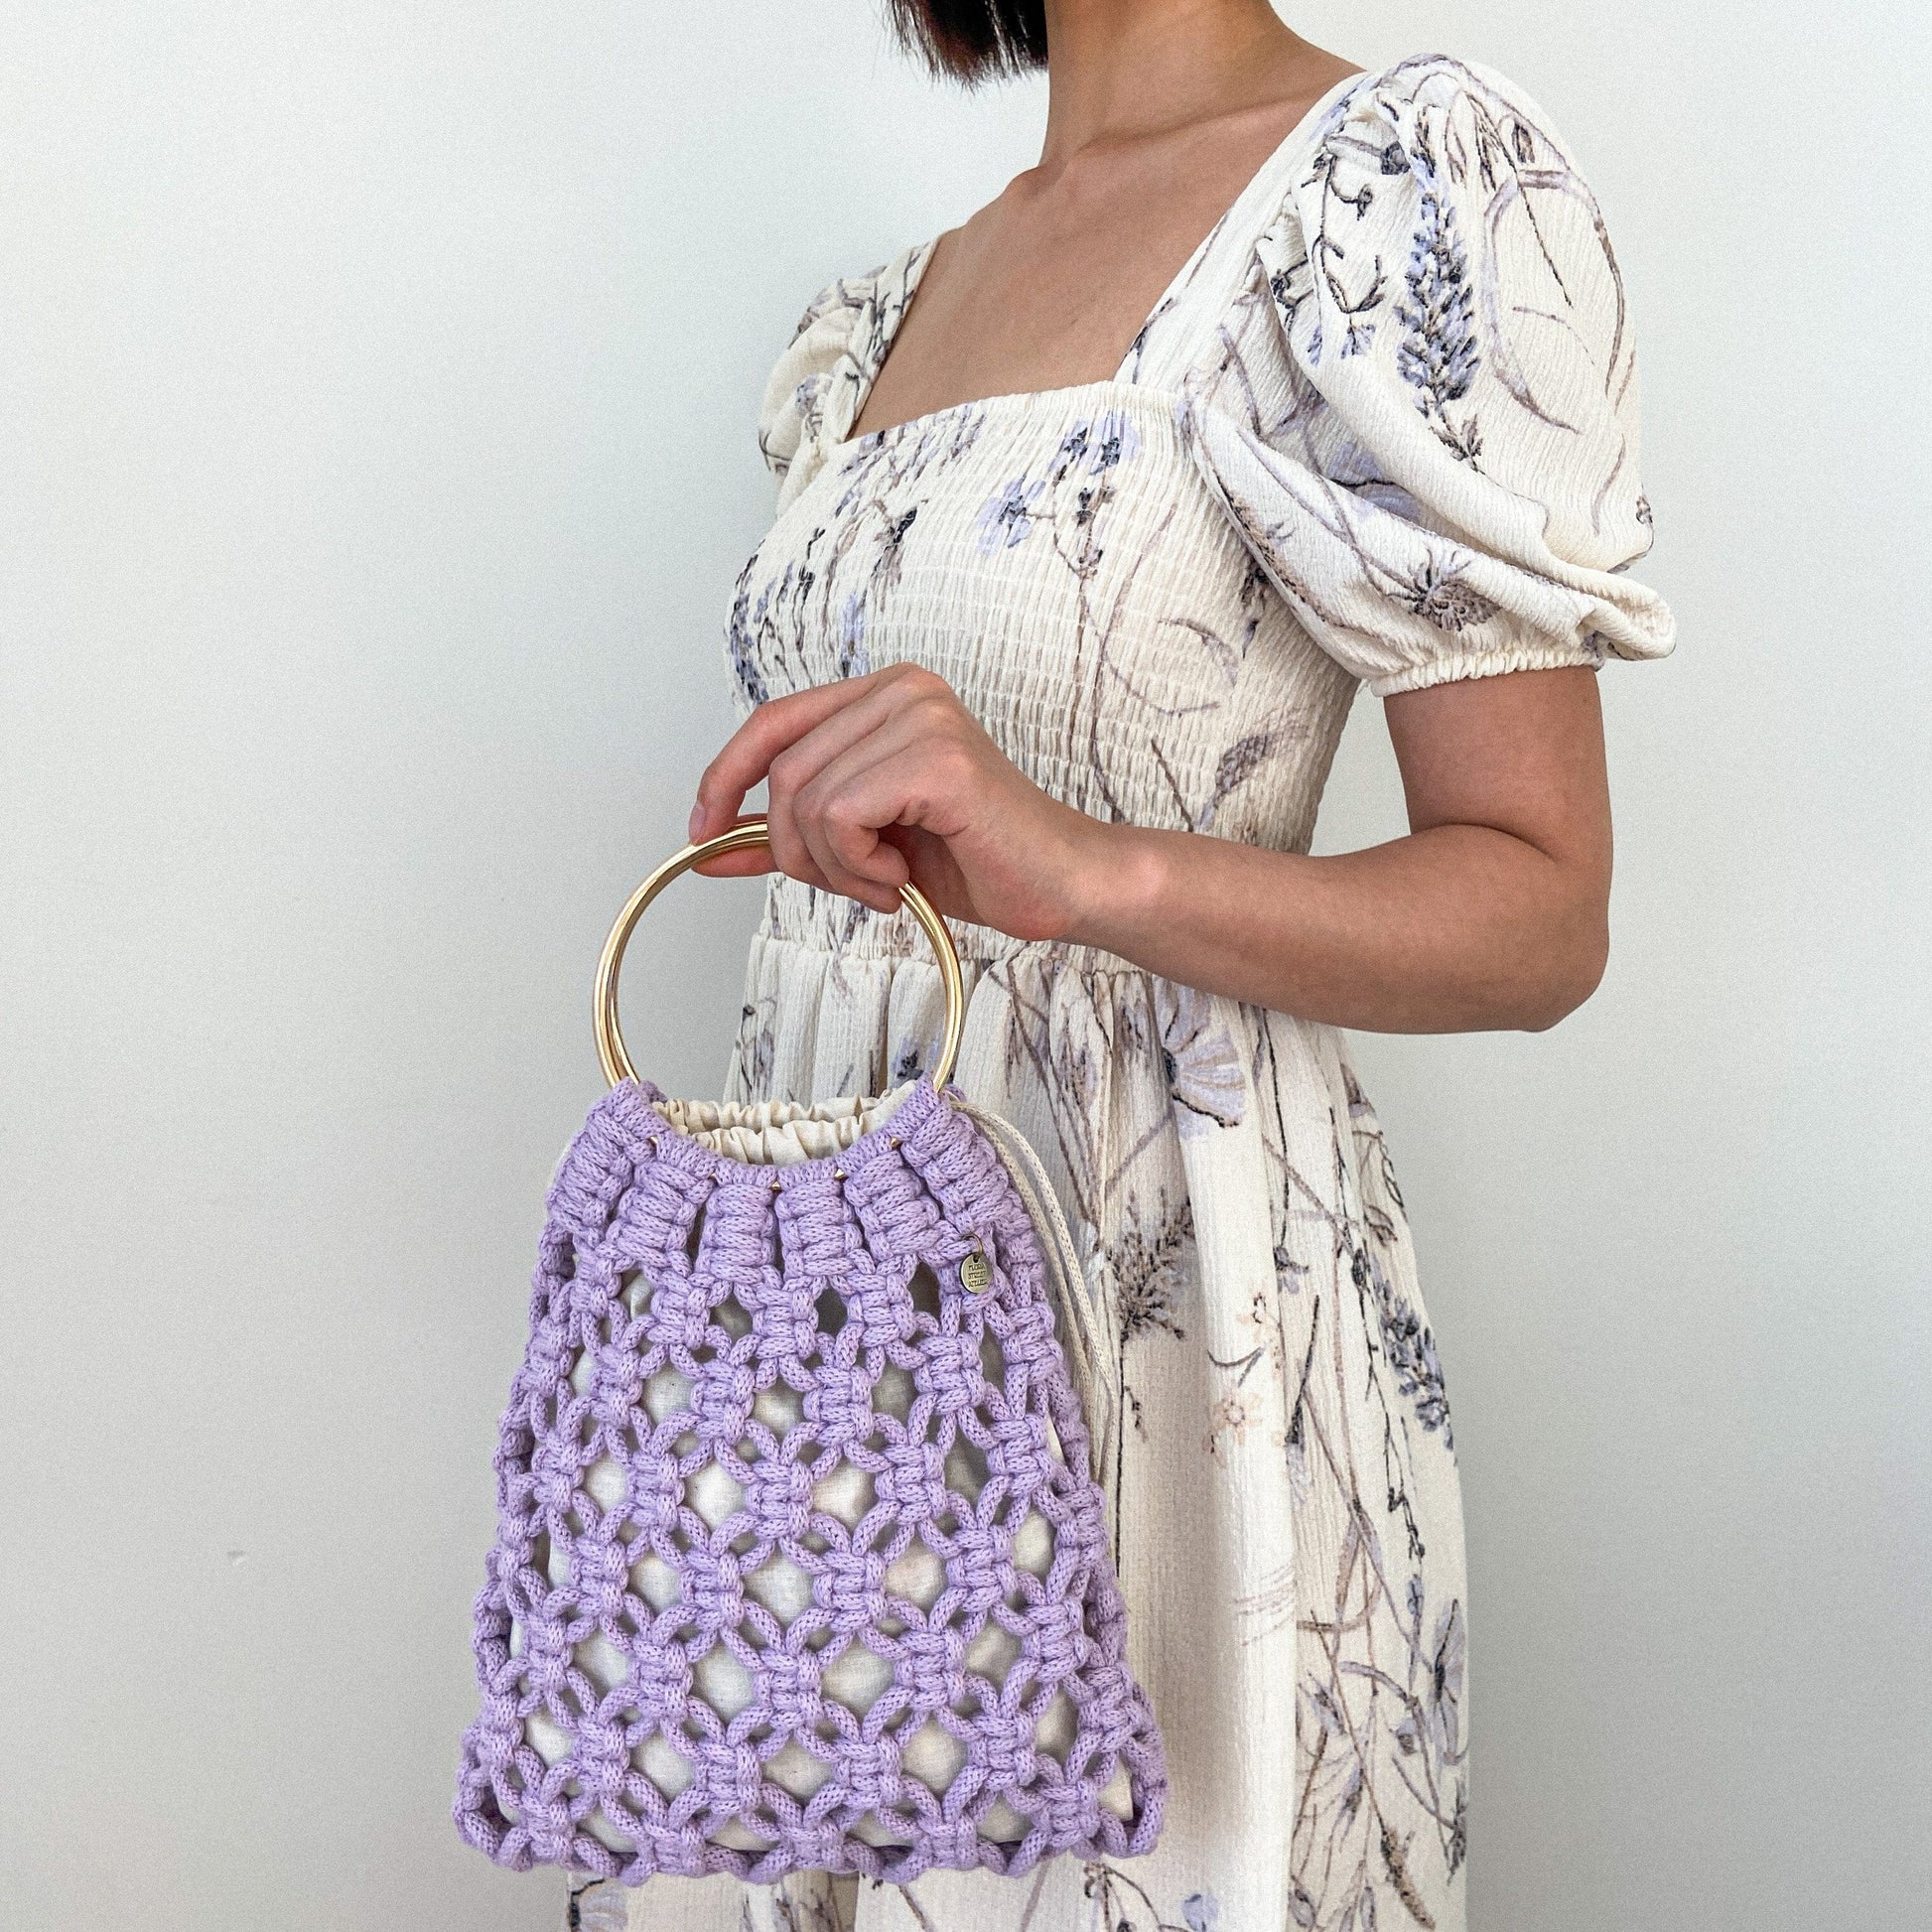  Craft Kits for Adult Women, 6 Colors Macrame Handbag Kit, Supplies: Pattern Instructions Cord Handles & Craft Bag